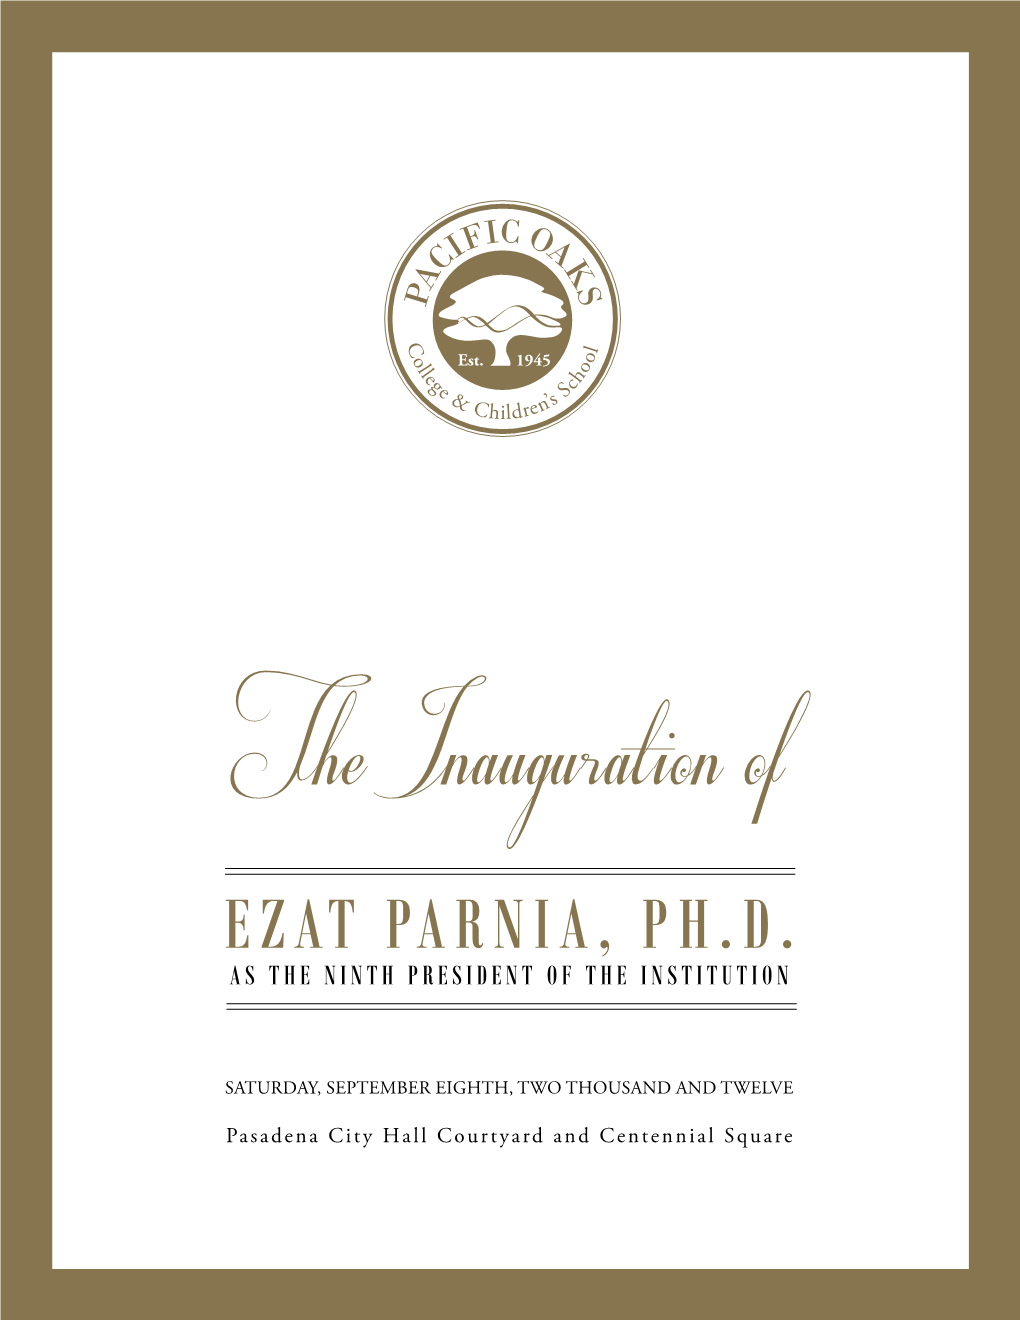 The Inauguration of Ezat Parnia, Ph.D